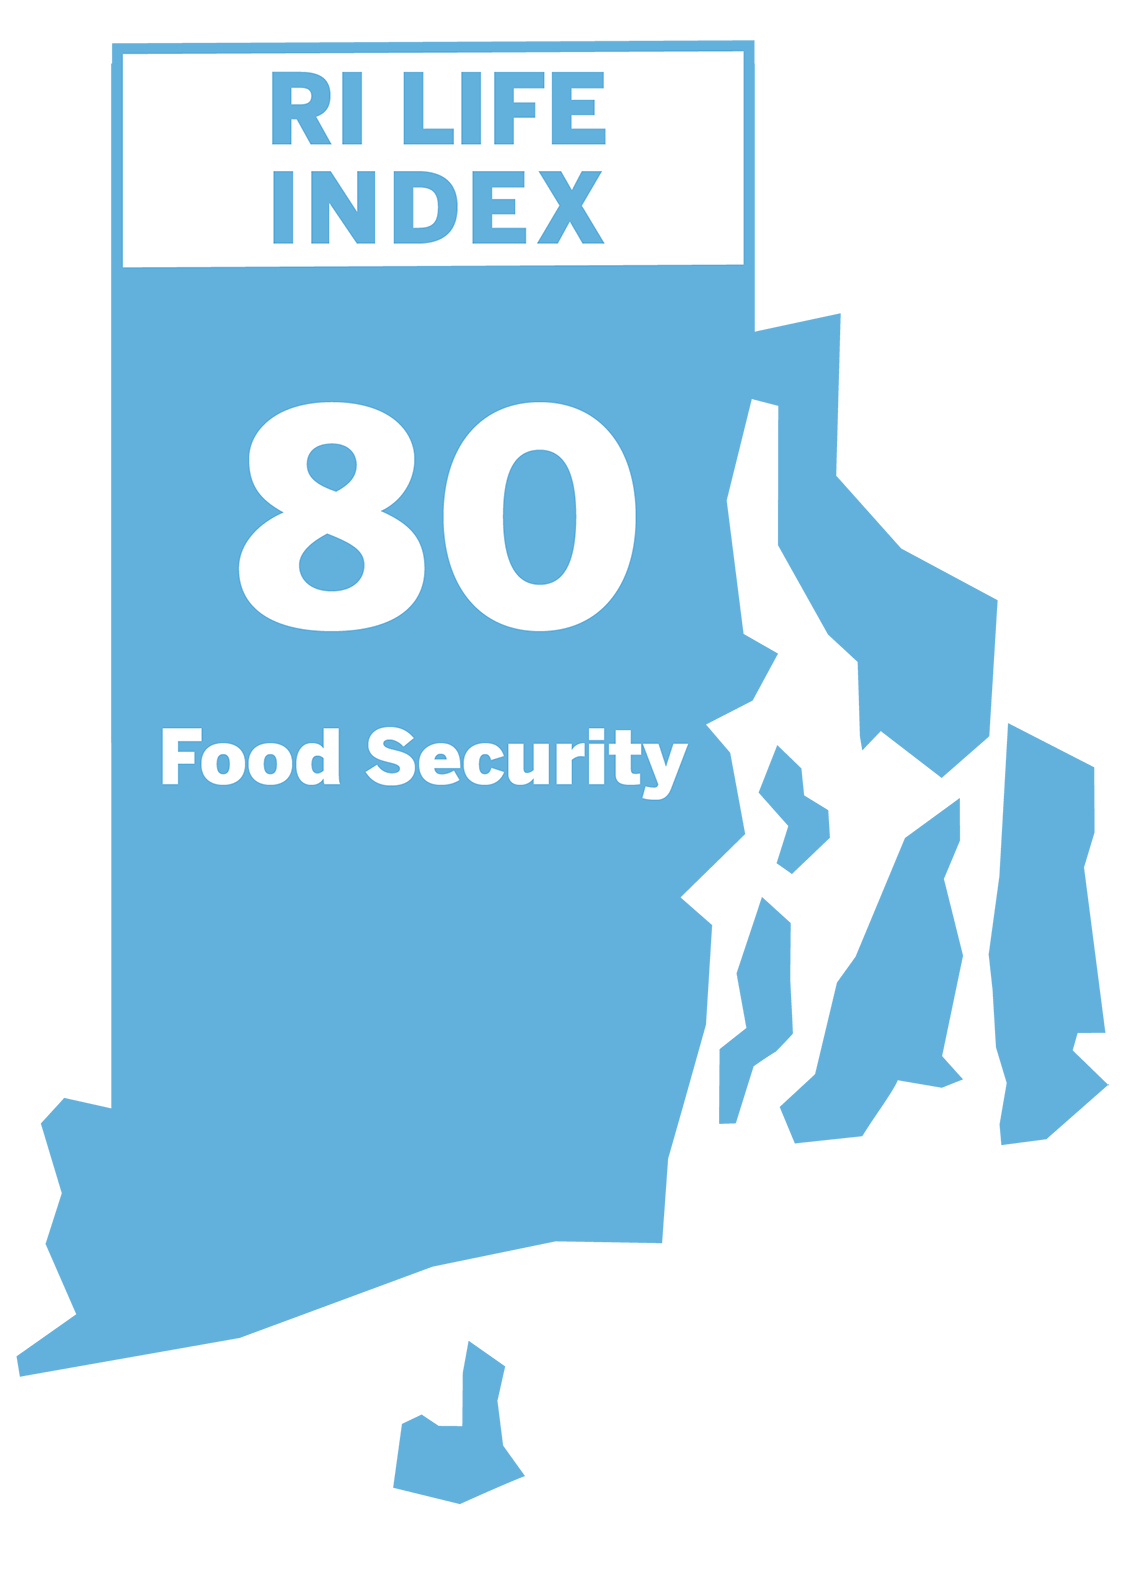 Food Security: 80